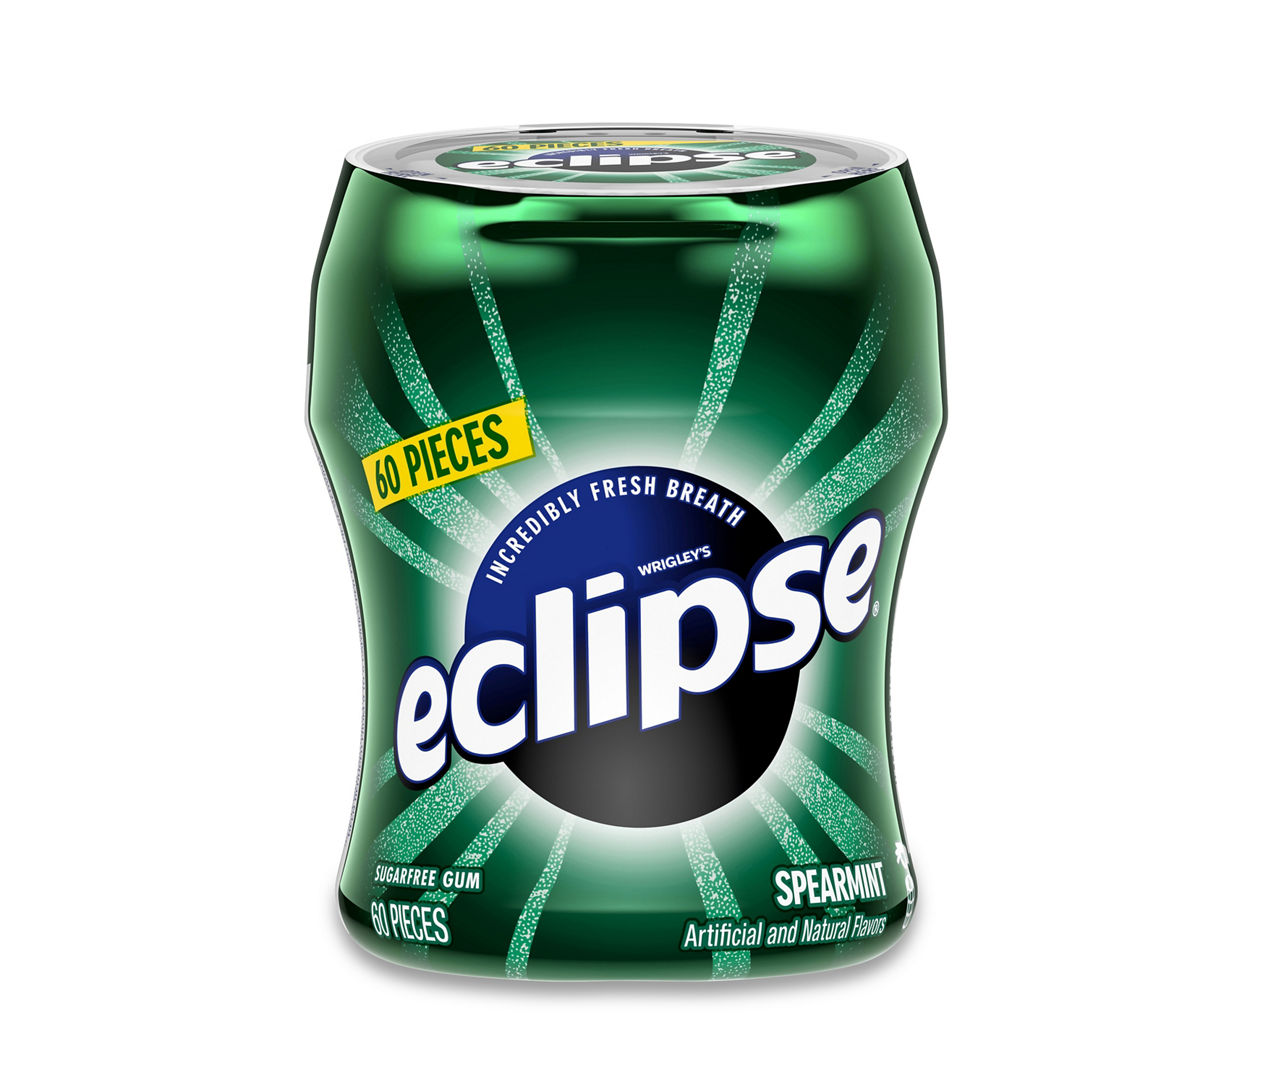 Eclipse Sugar Free Gum Spearmint